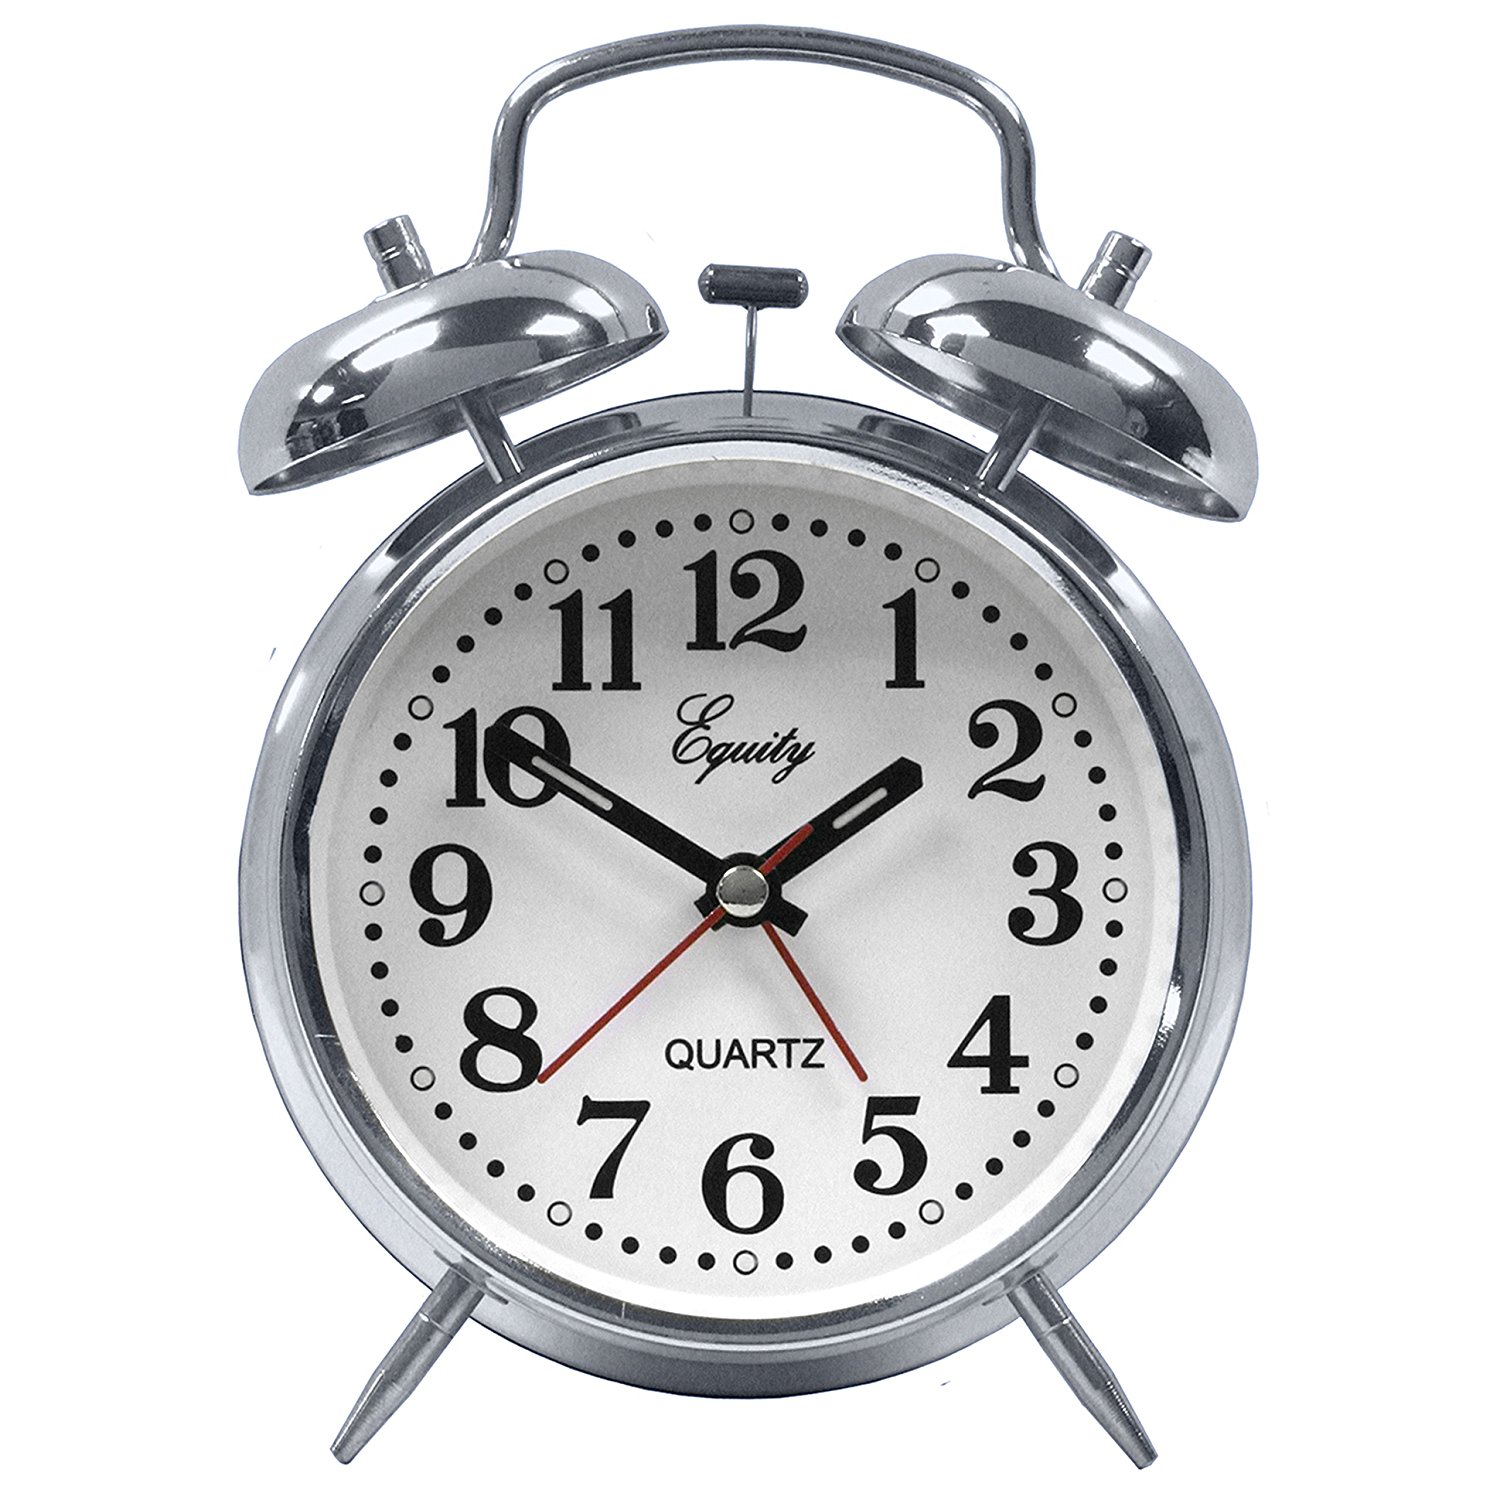 Amazon.com: Equity by La Crosse Analog Twin Bell Alarm Clock: Home ...